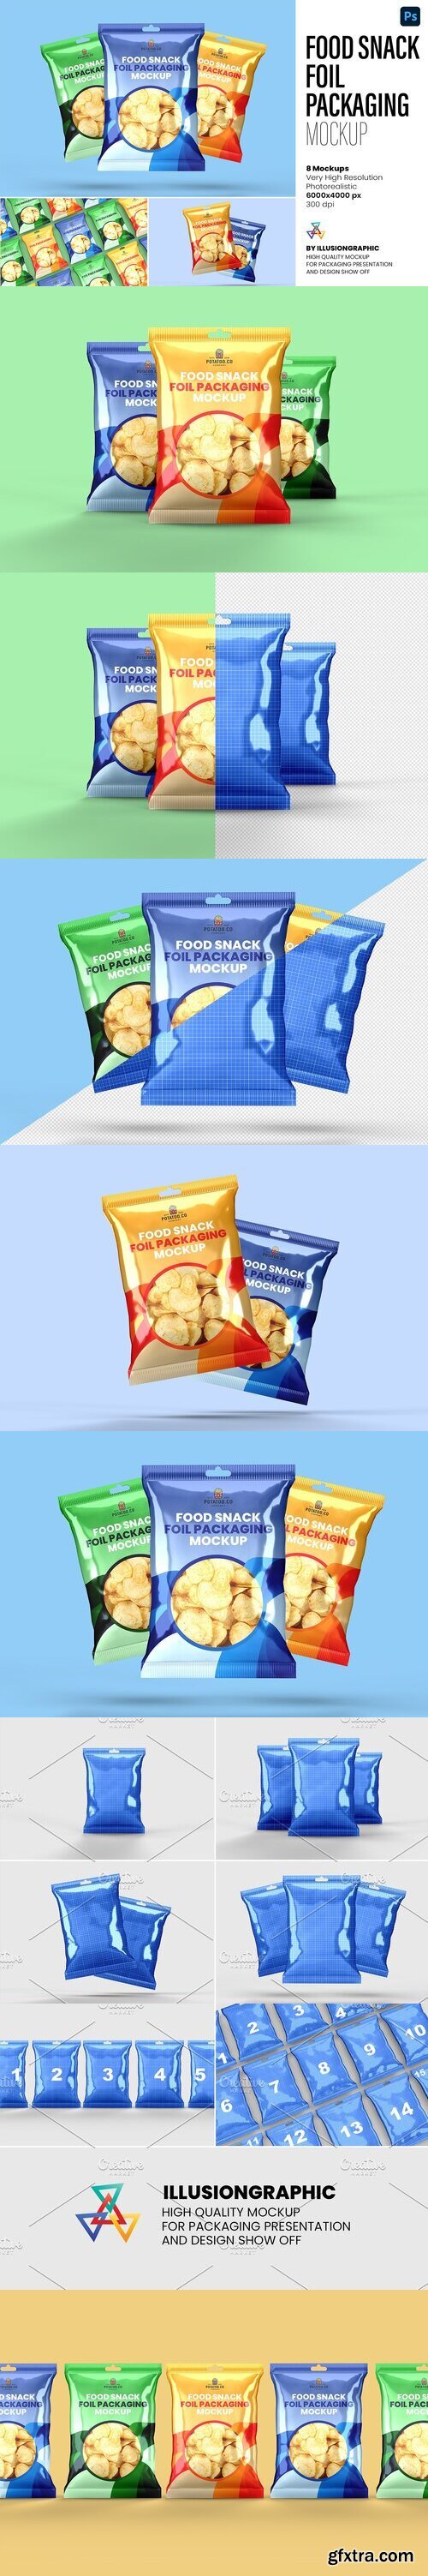 CreativeMarket - Food Snack Foil Packaging Mockup 10182120